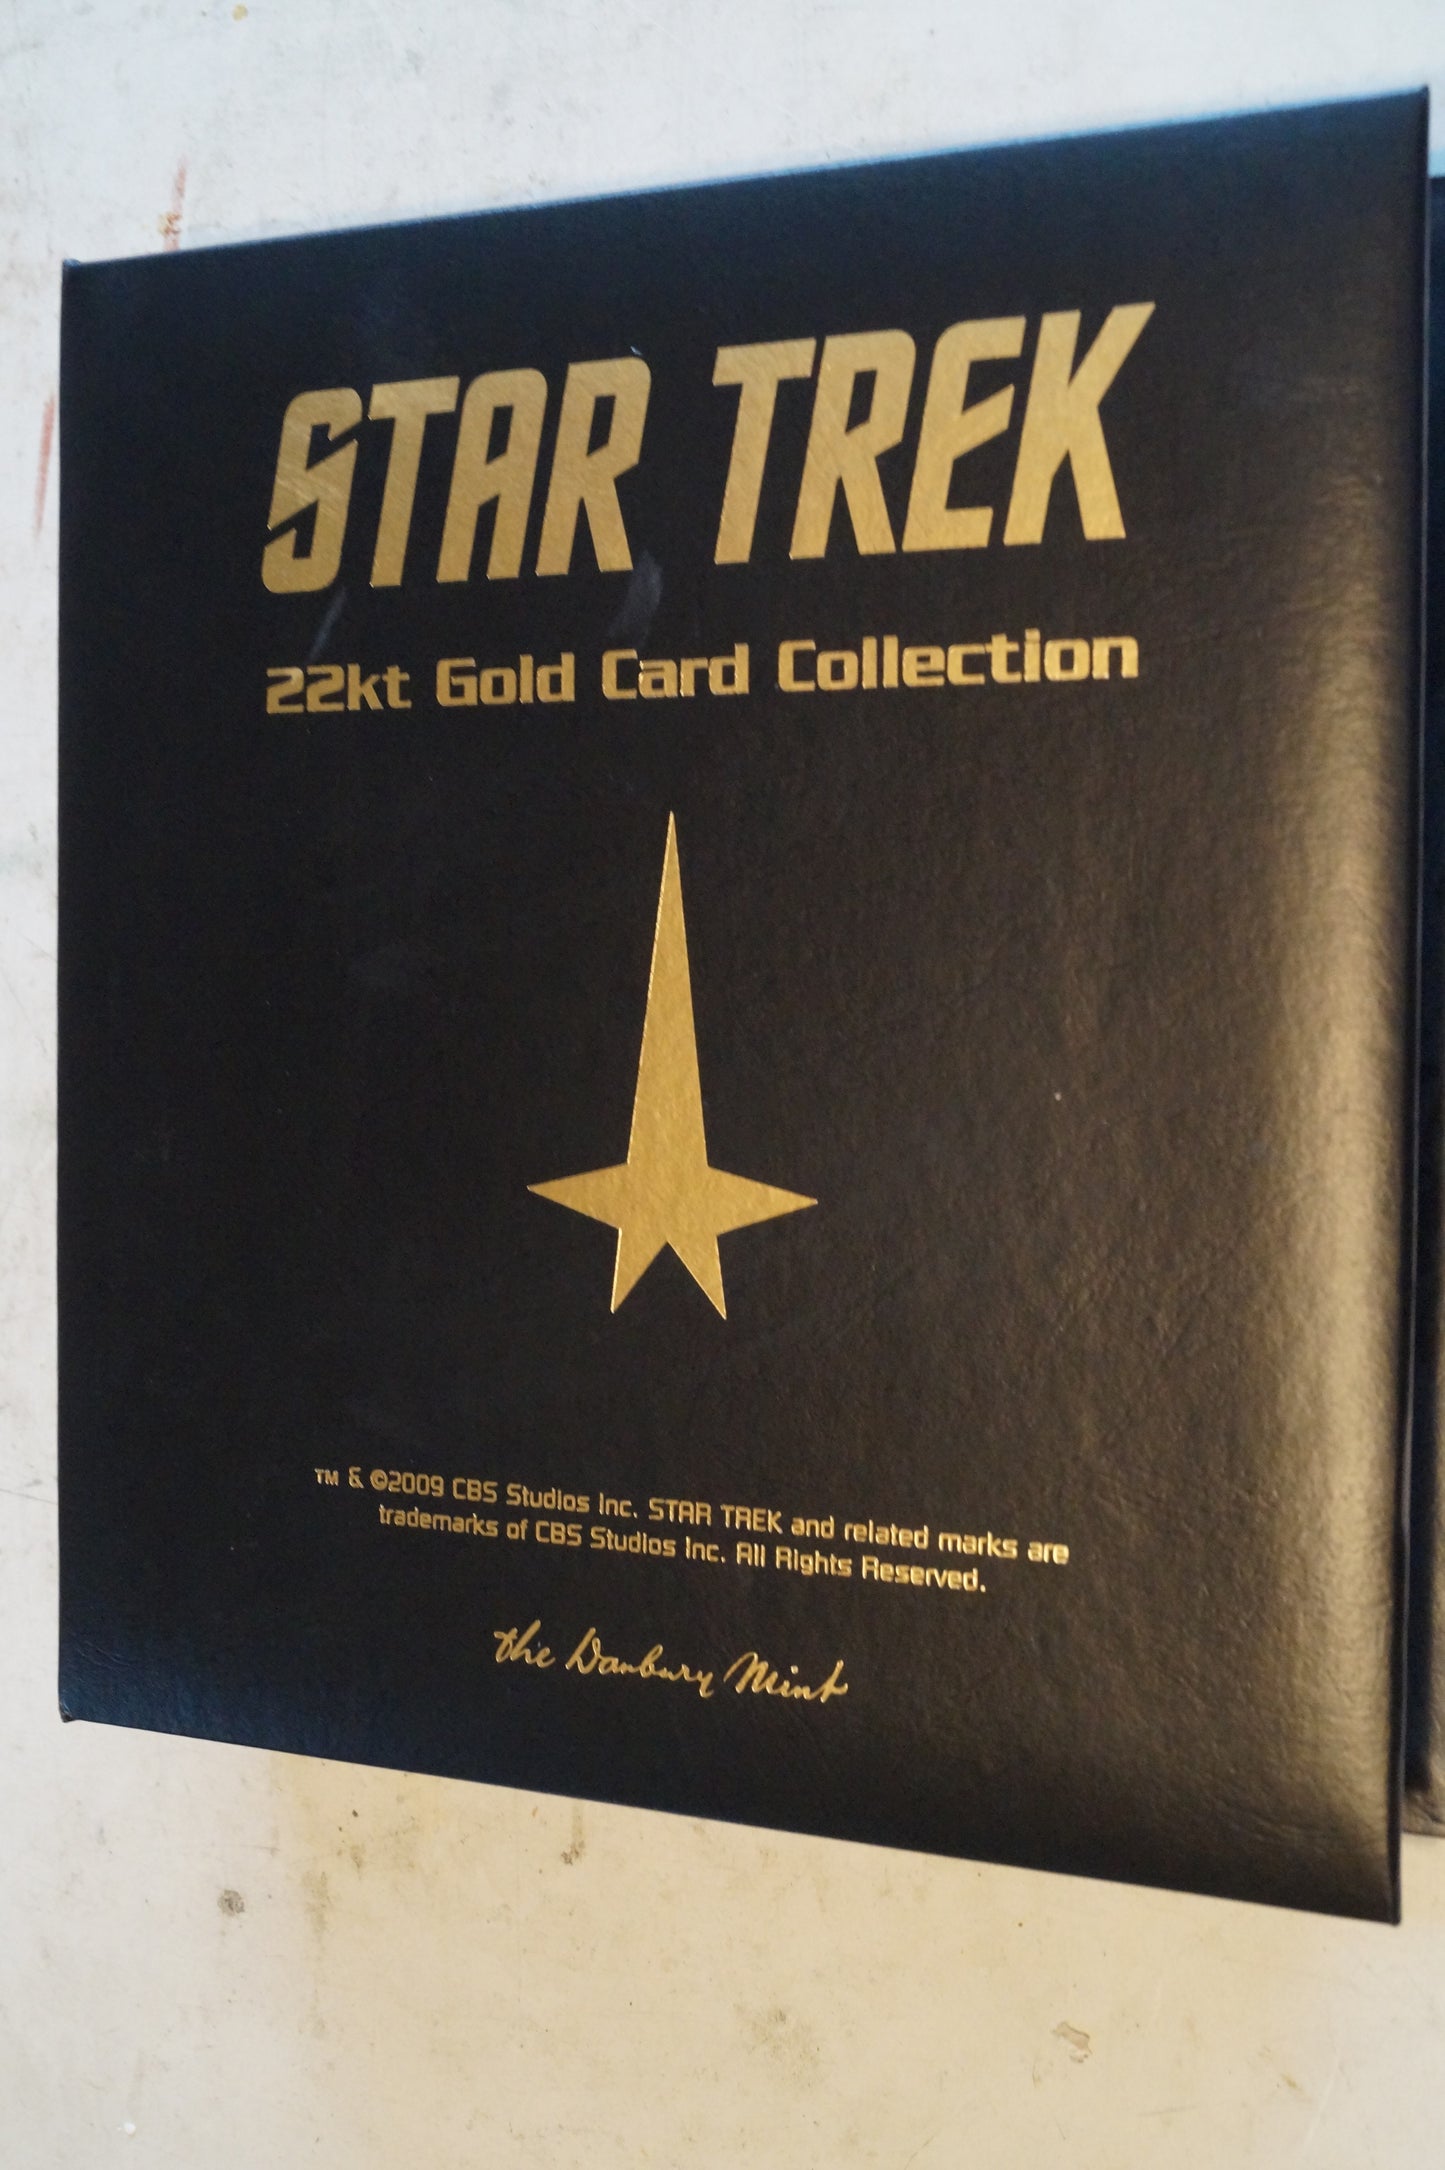 Star Trek 22k gold card collection